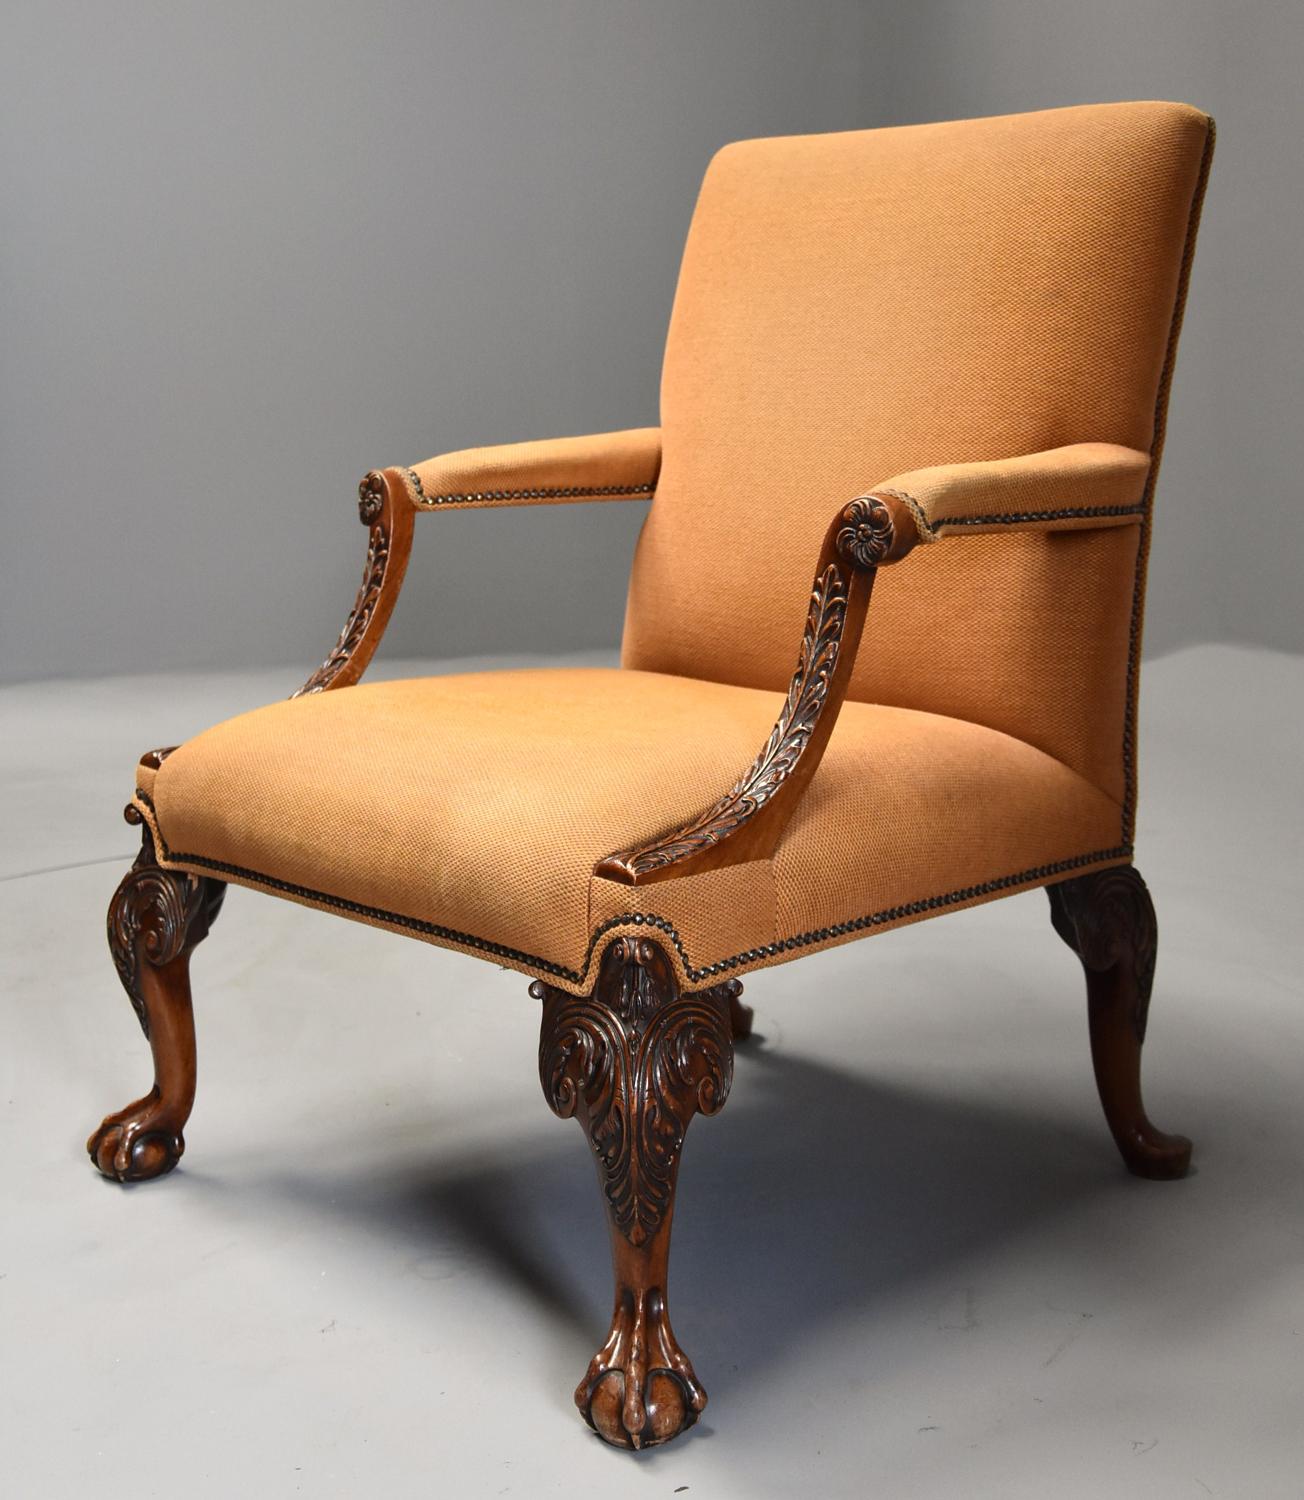 Early 20th century fine quality Georgian style mahogany armchair